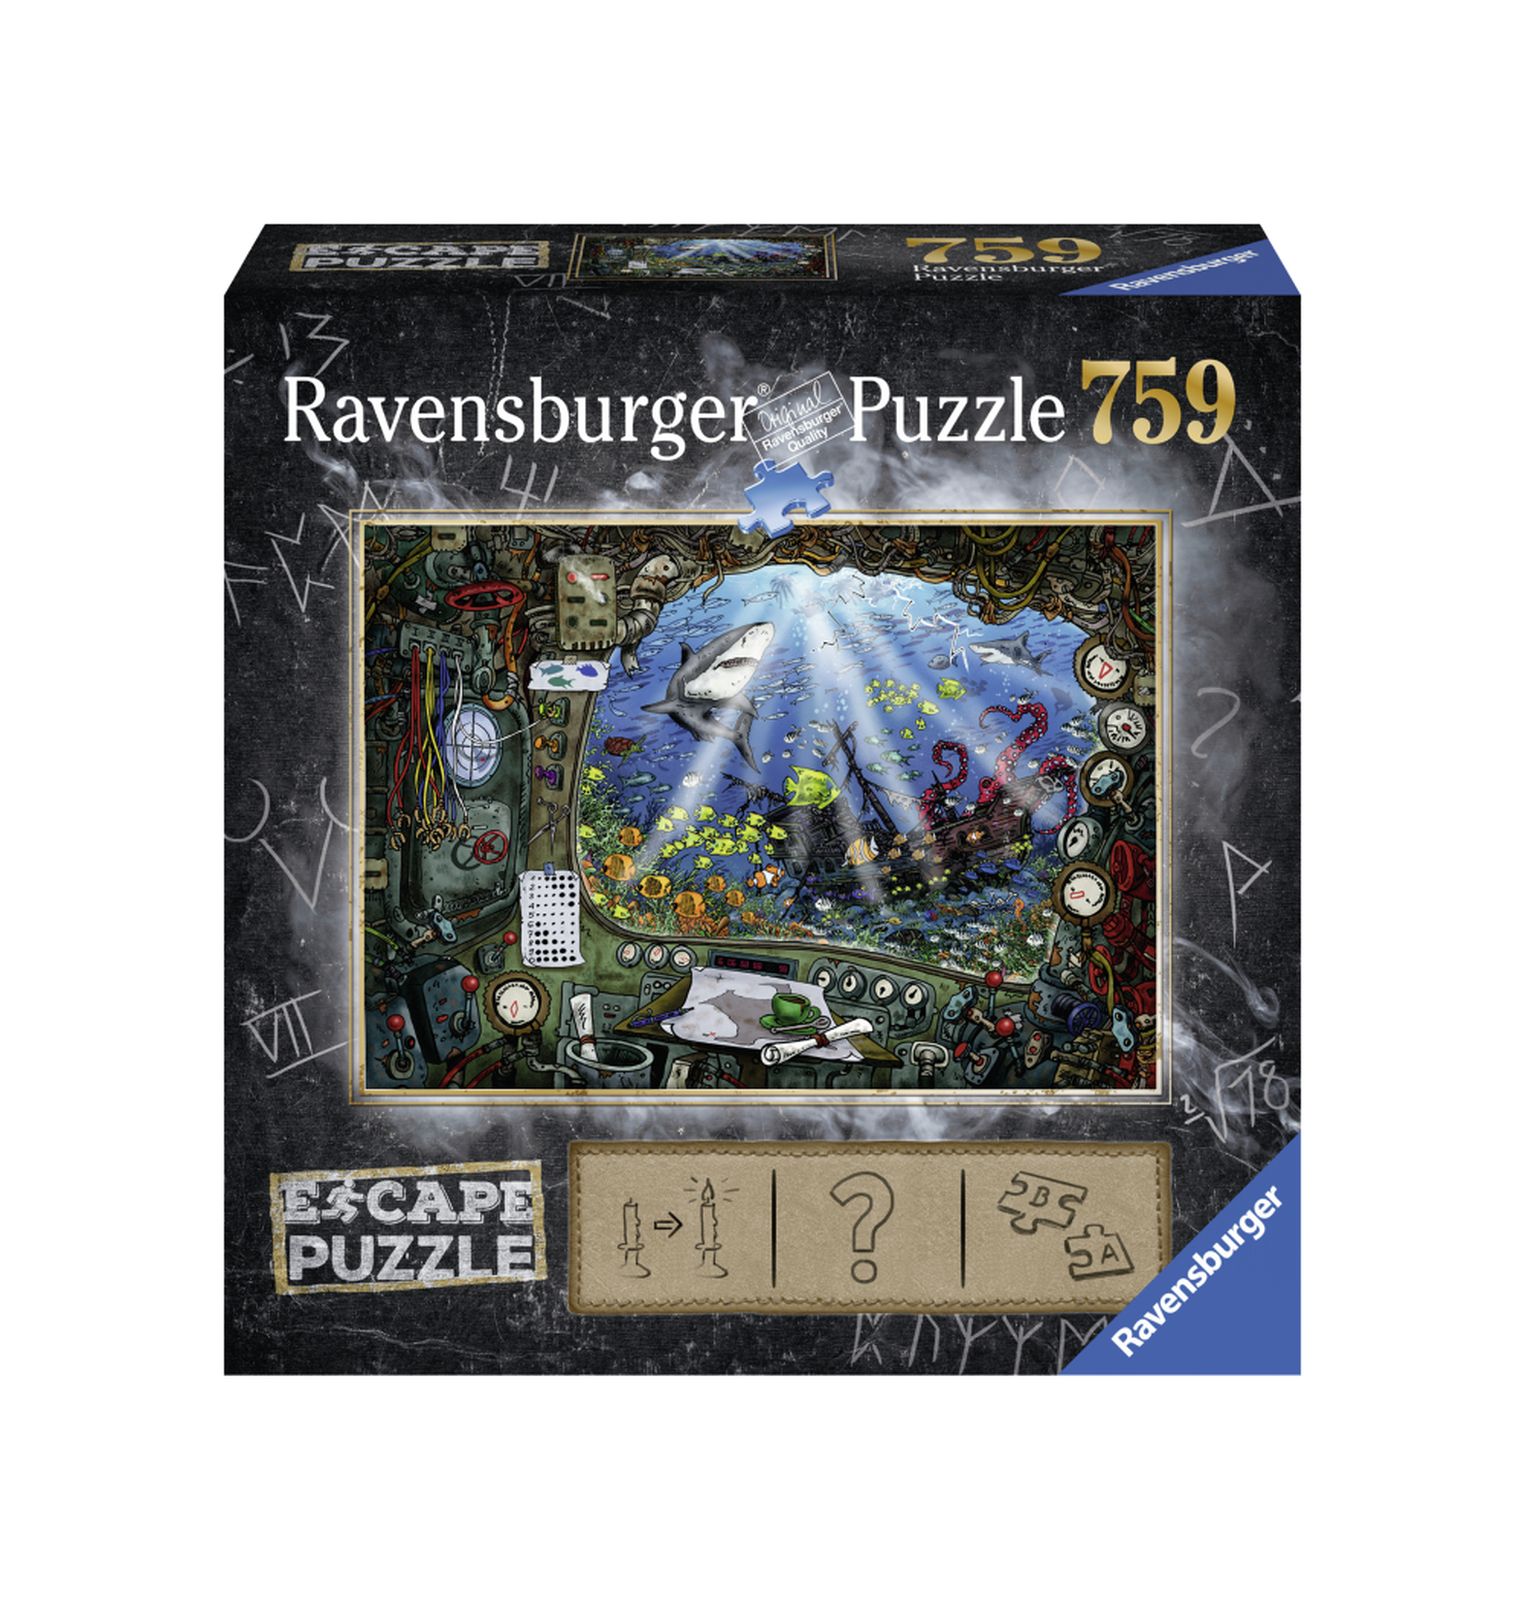 Ravensburger escape the puzzle - sottomarino - RAVENSBURGER